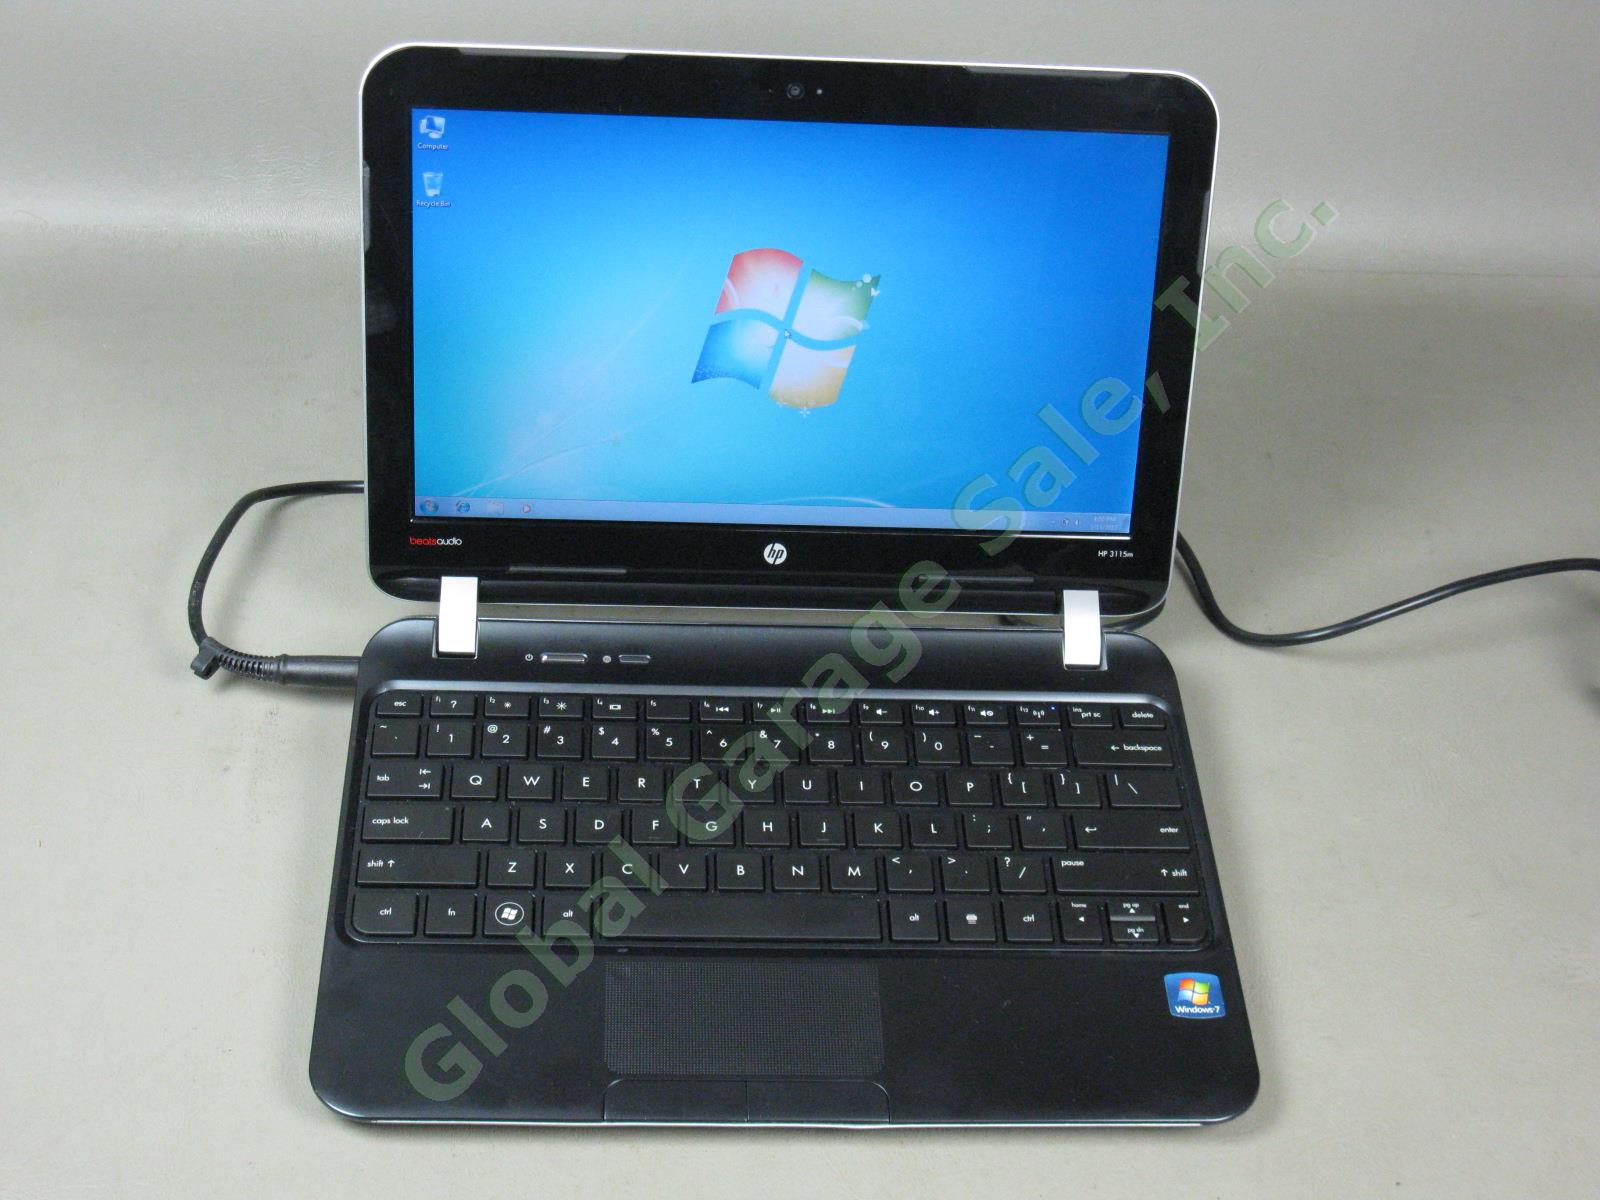 HP 3115m 11.6" Notebook Laptop Computer 1.65GHz 4GB RAM 320GB Windows 7 Ultimate